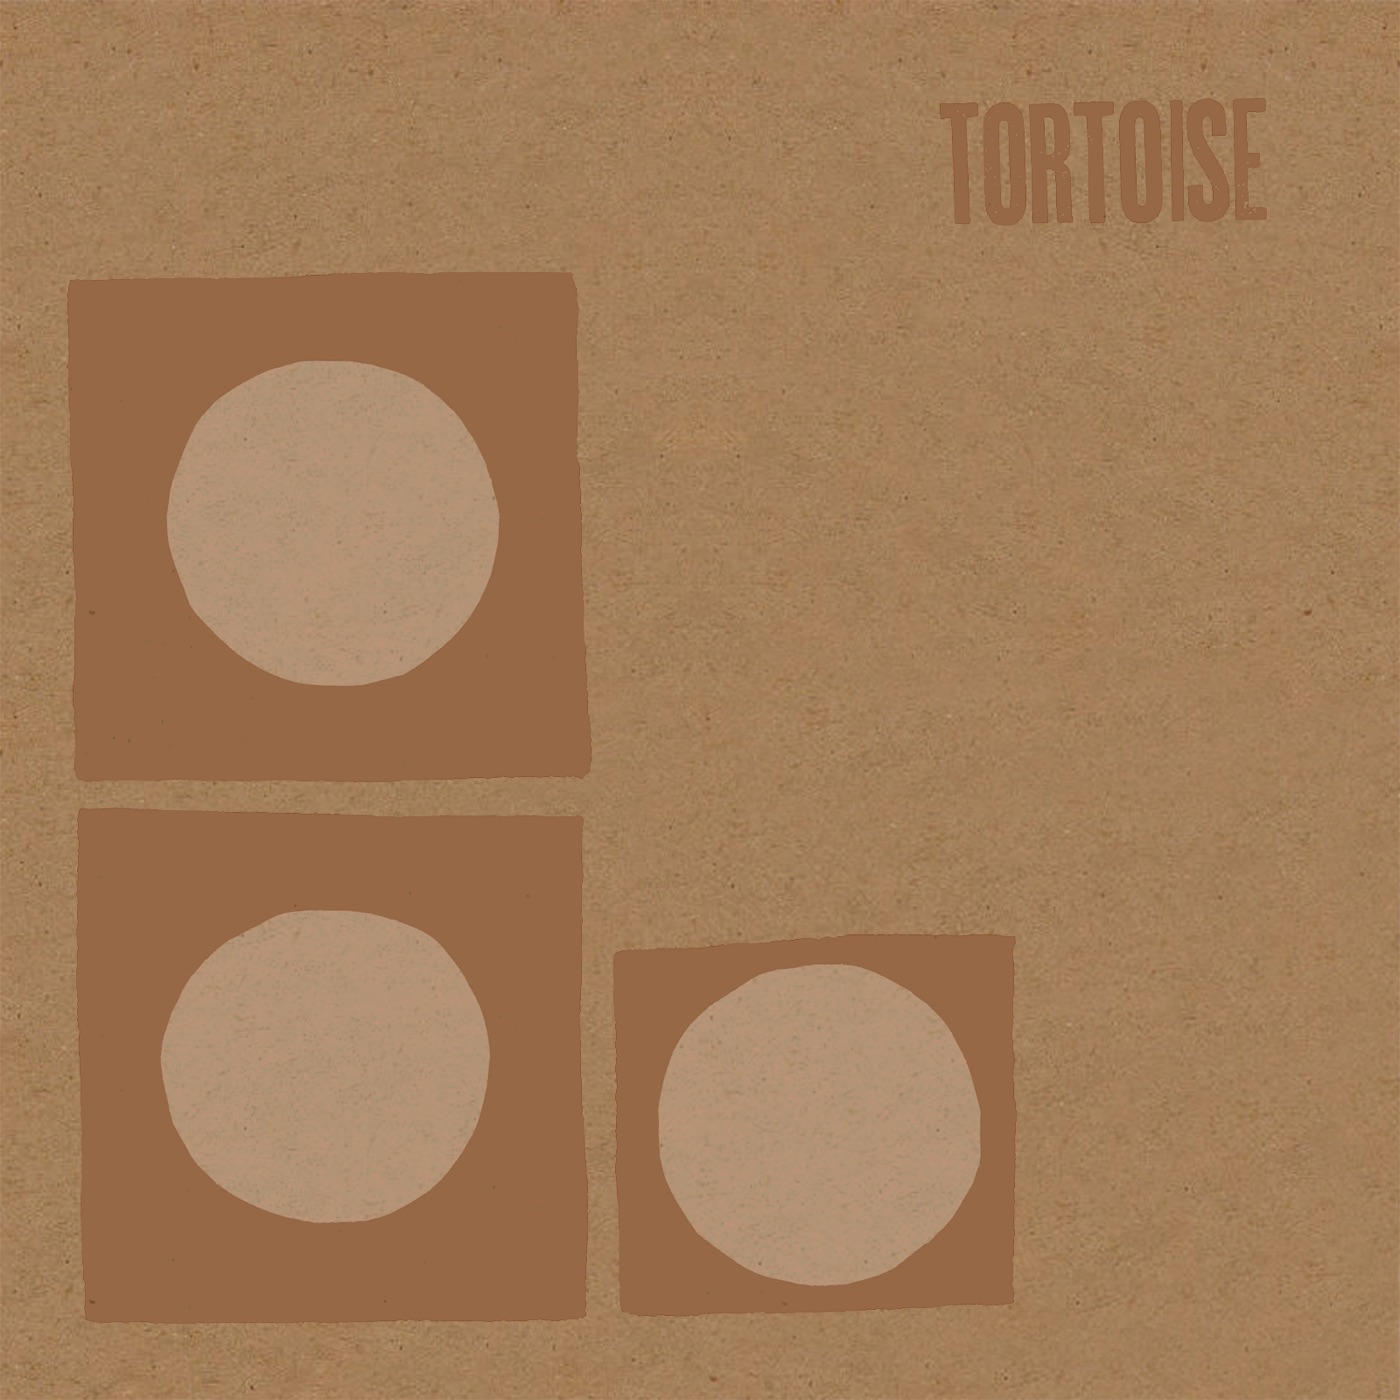 Tortoise by Tortoise